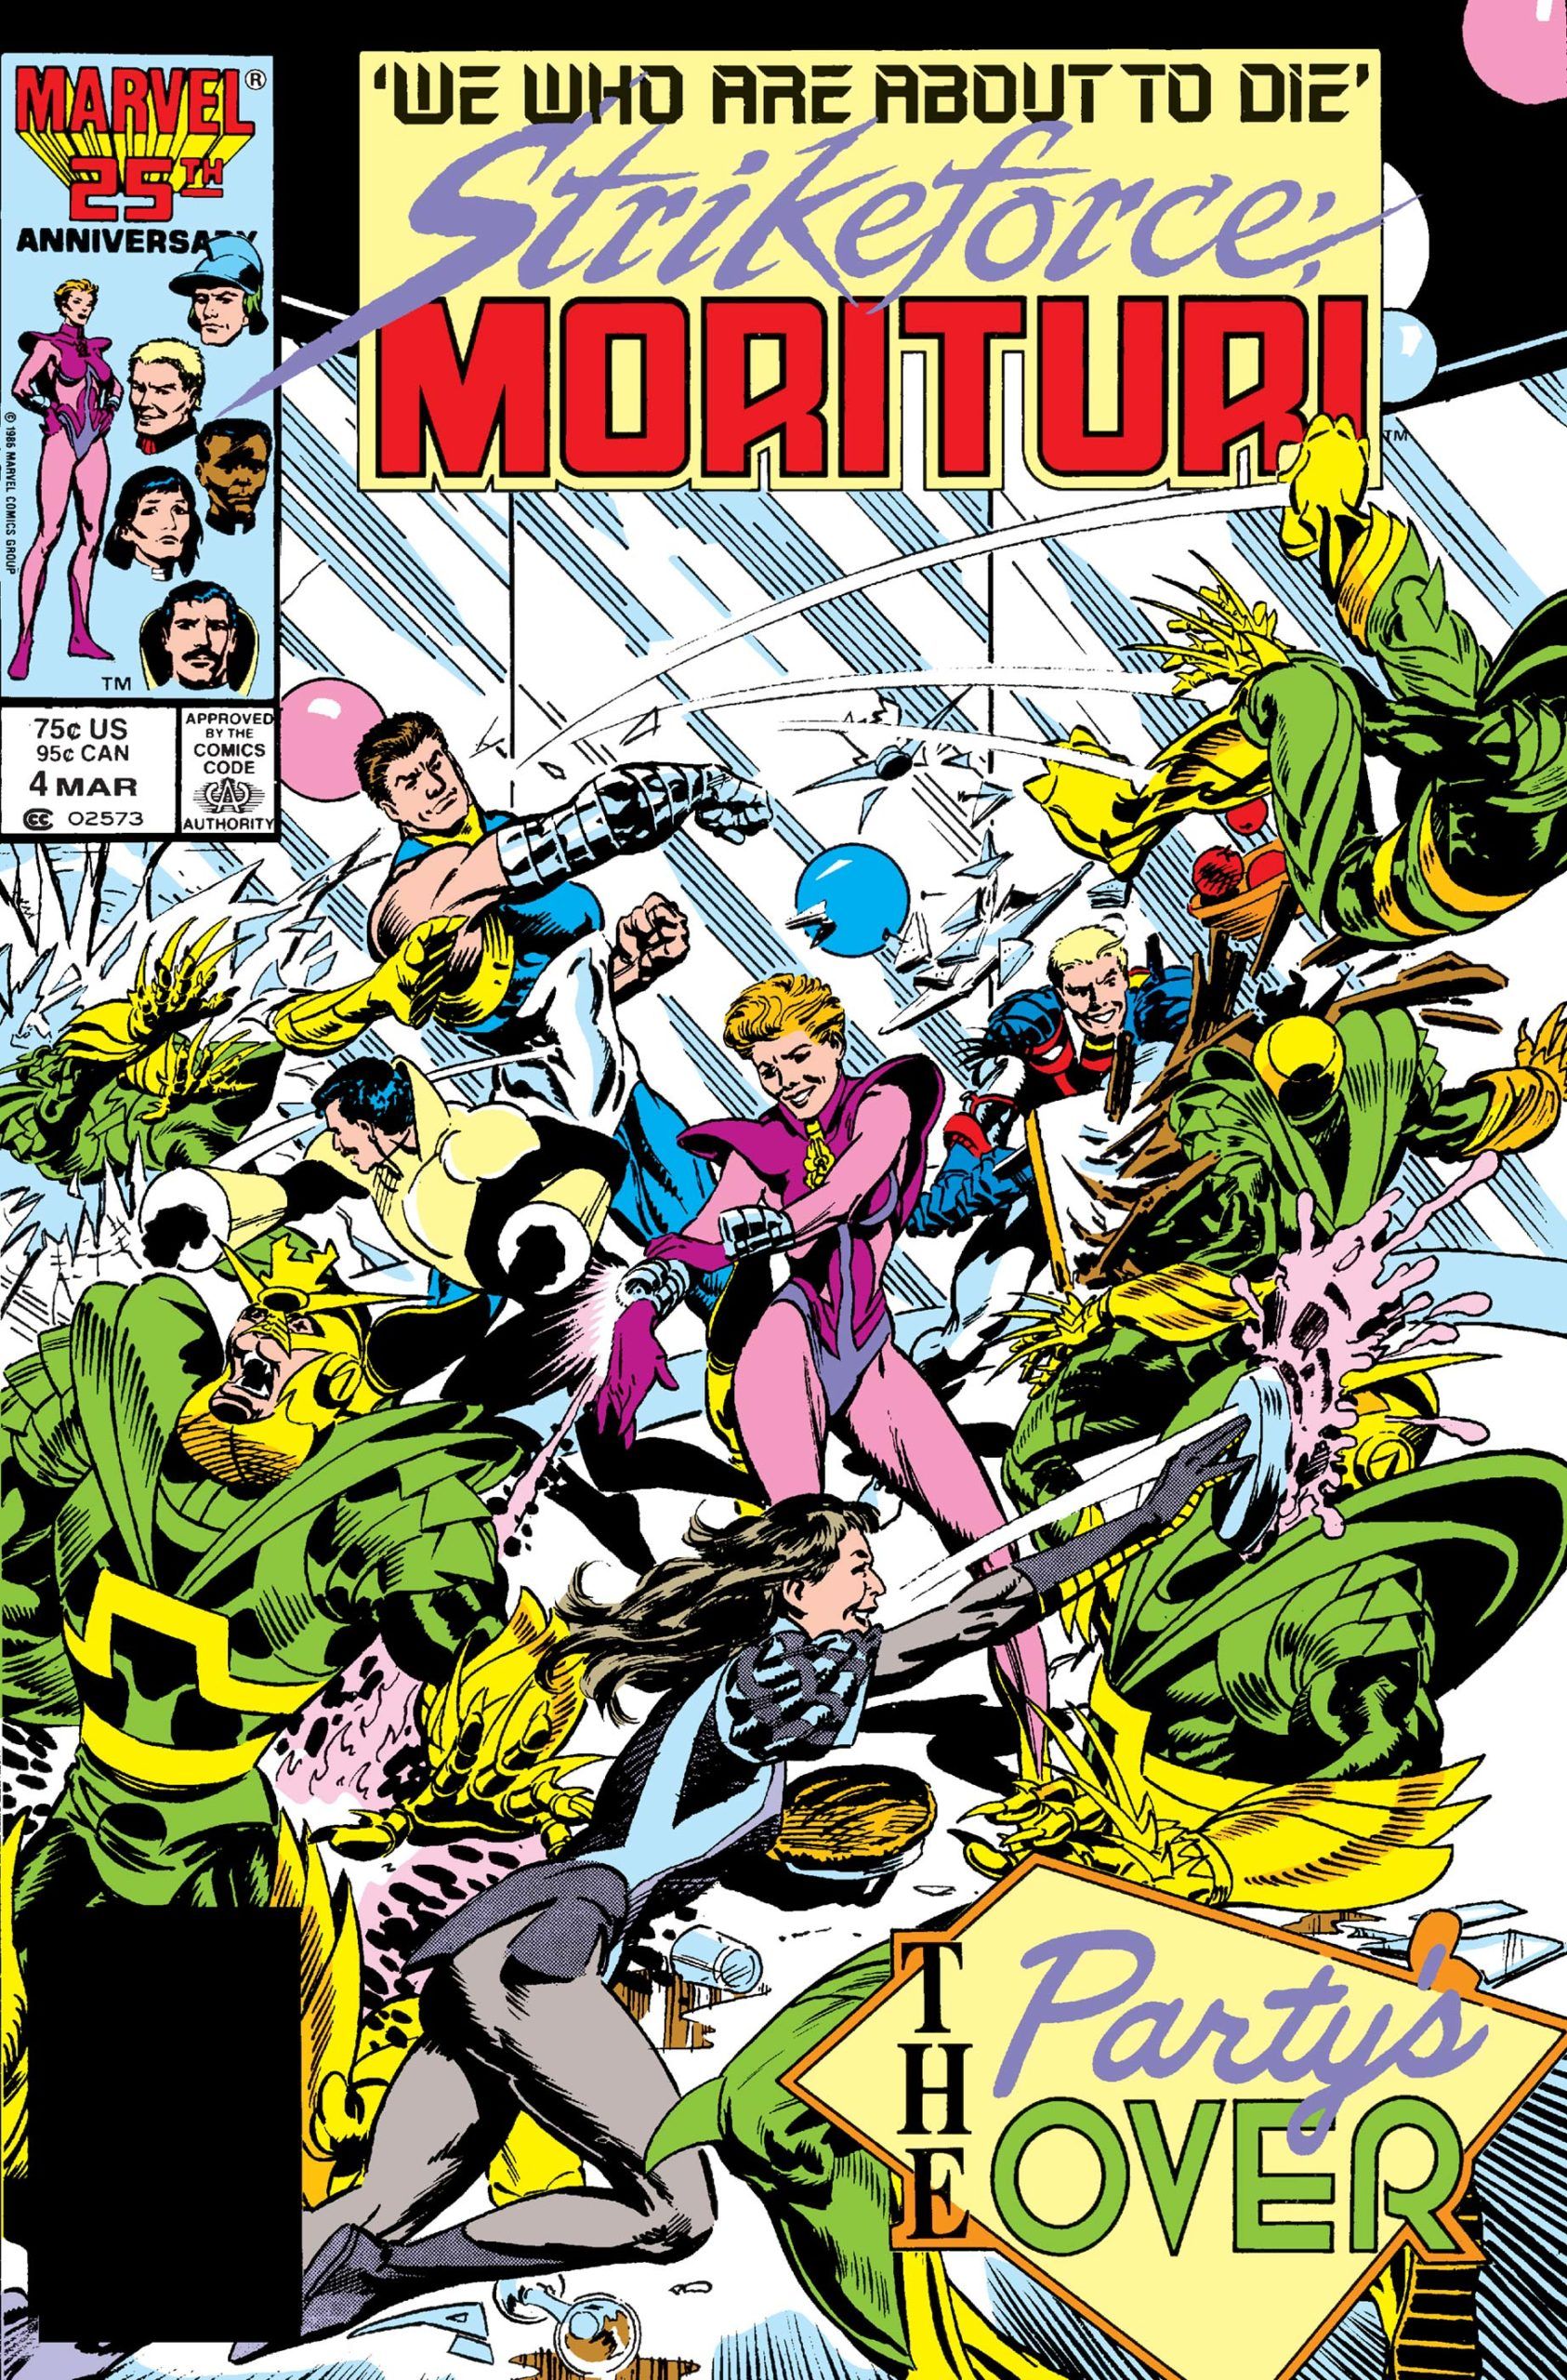 Strikeforce: Morituri #4 - Media Bash released by Marvel on March 1, 1987